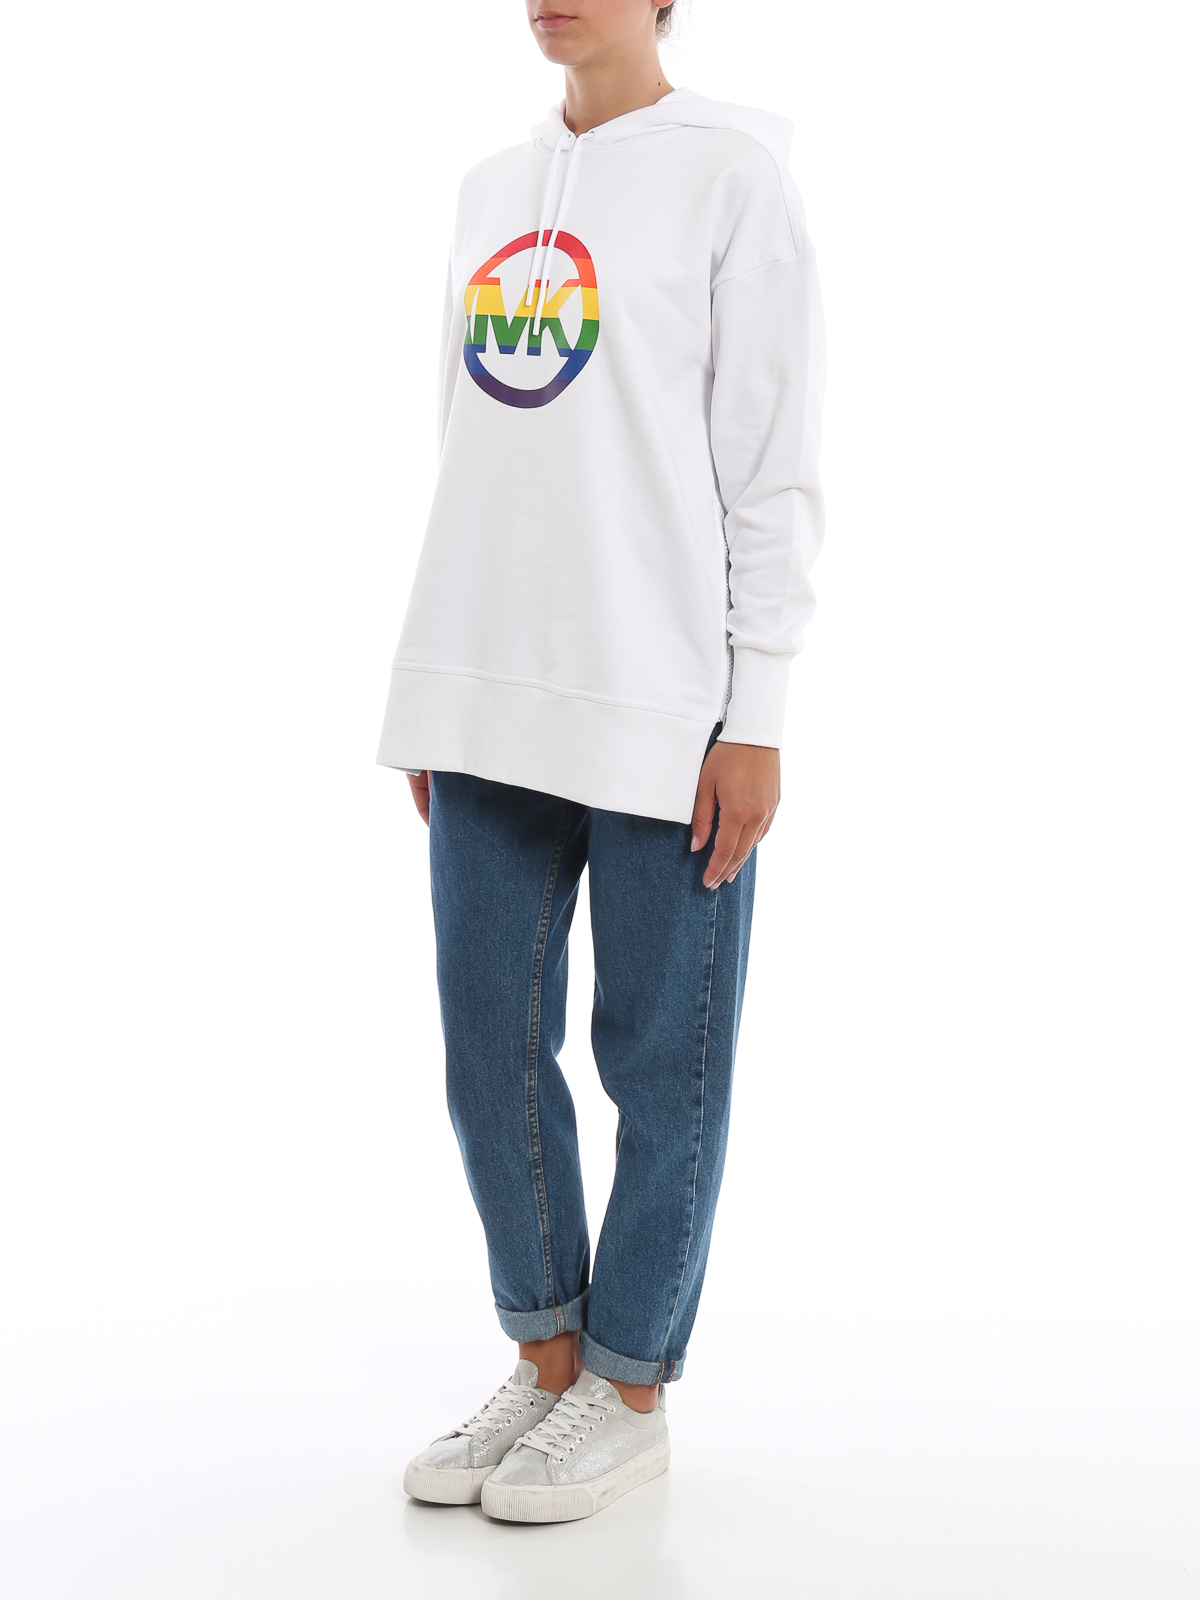 michael kors rainbow sweater